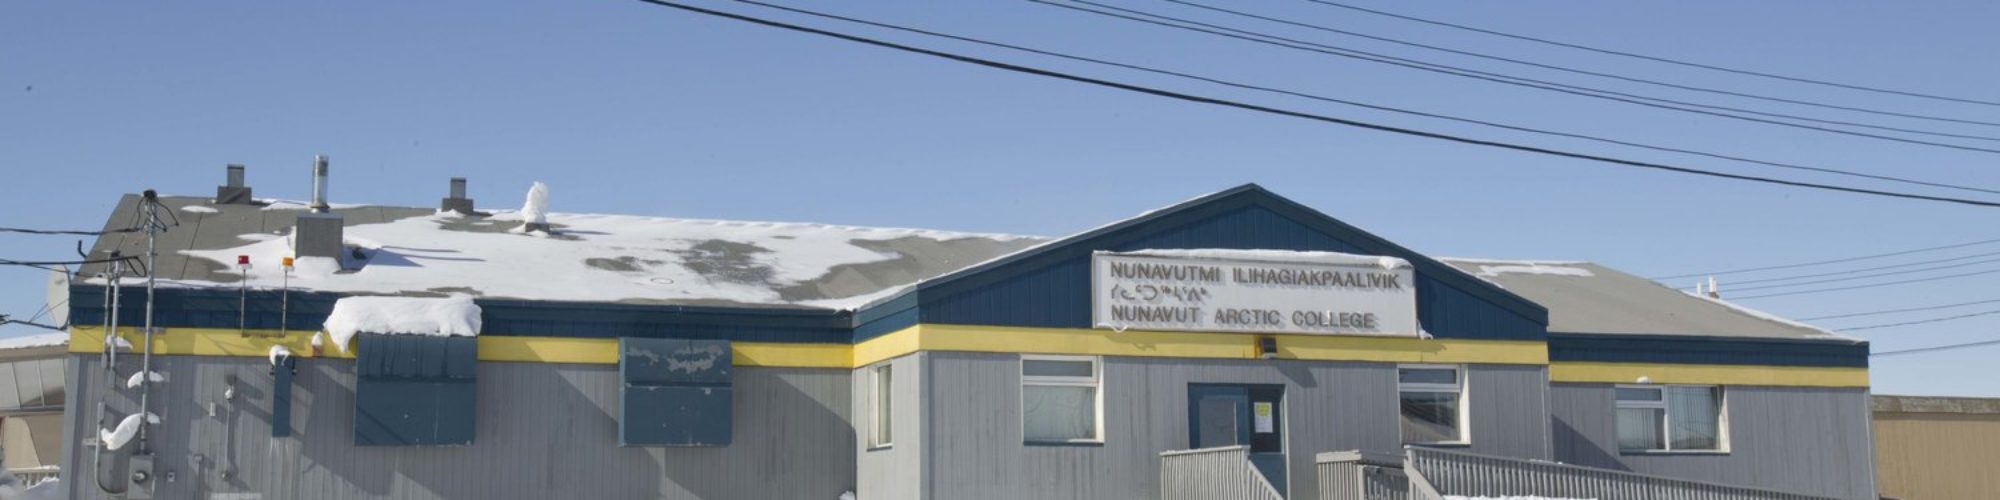 Study In Nunavut Arctic College Canada